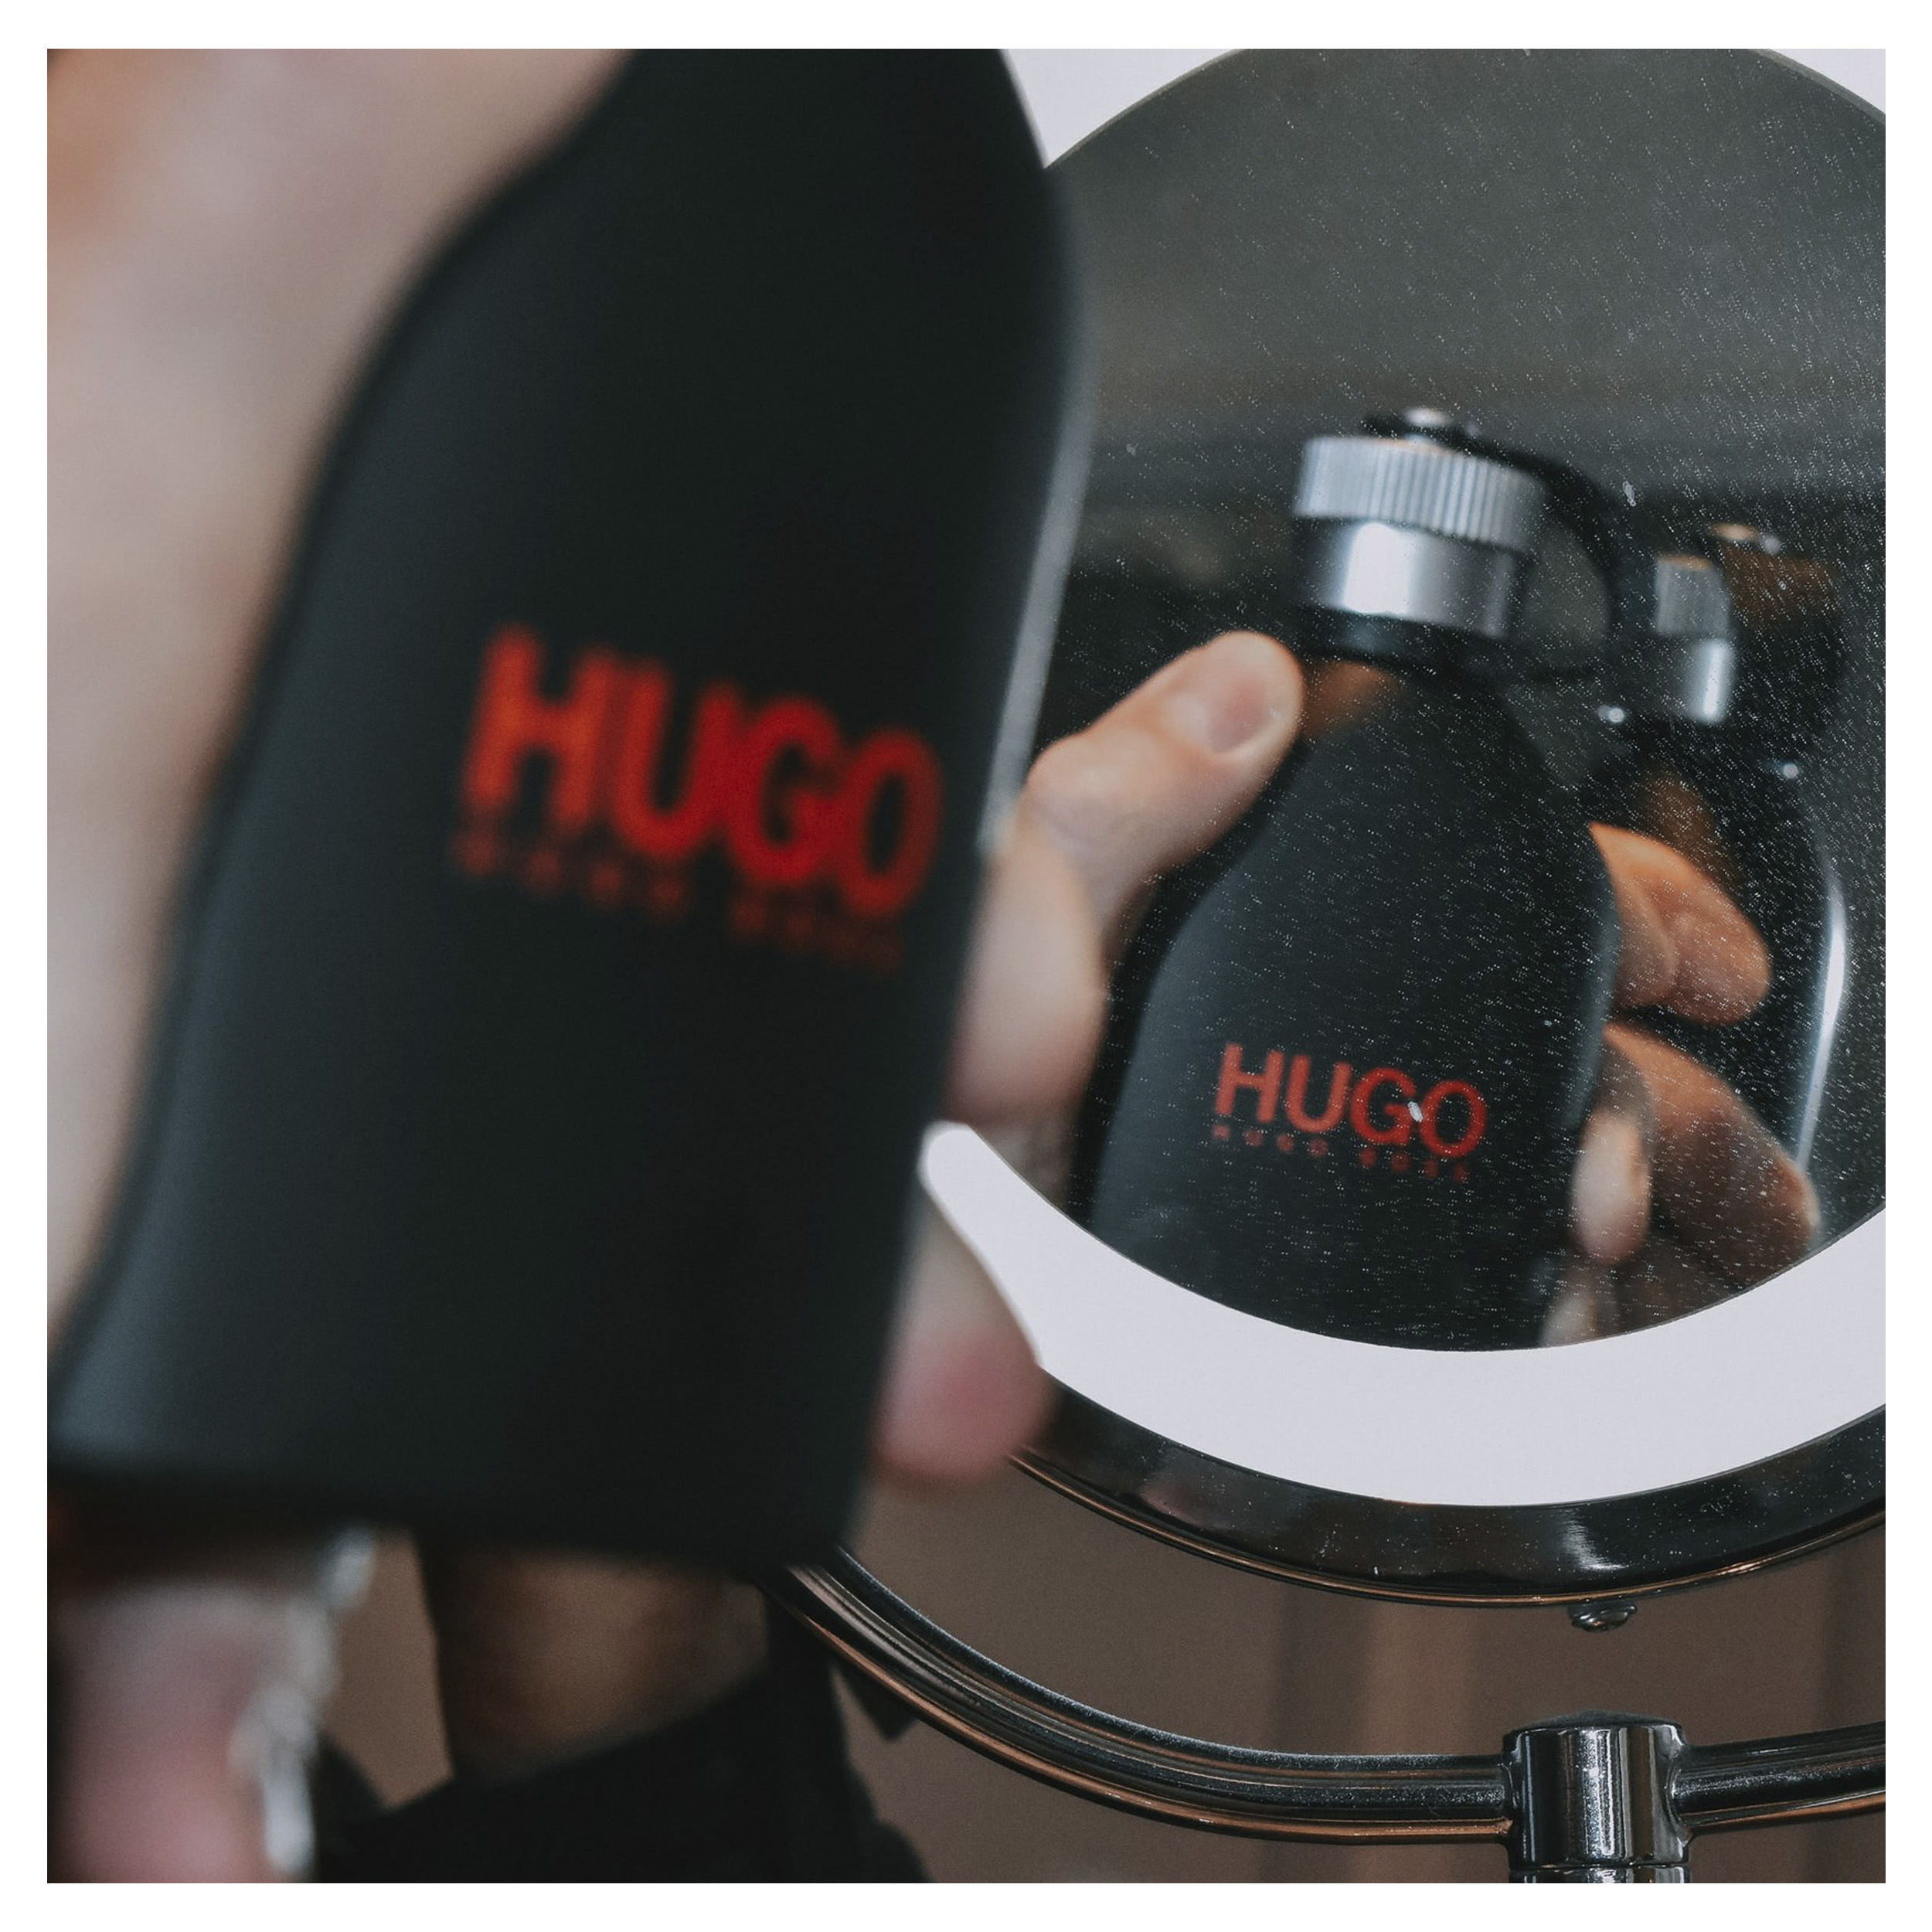 Perfume Hugo Just Different Hugo Boss  (Replica Con Fragancia Importada)- Hombre